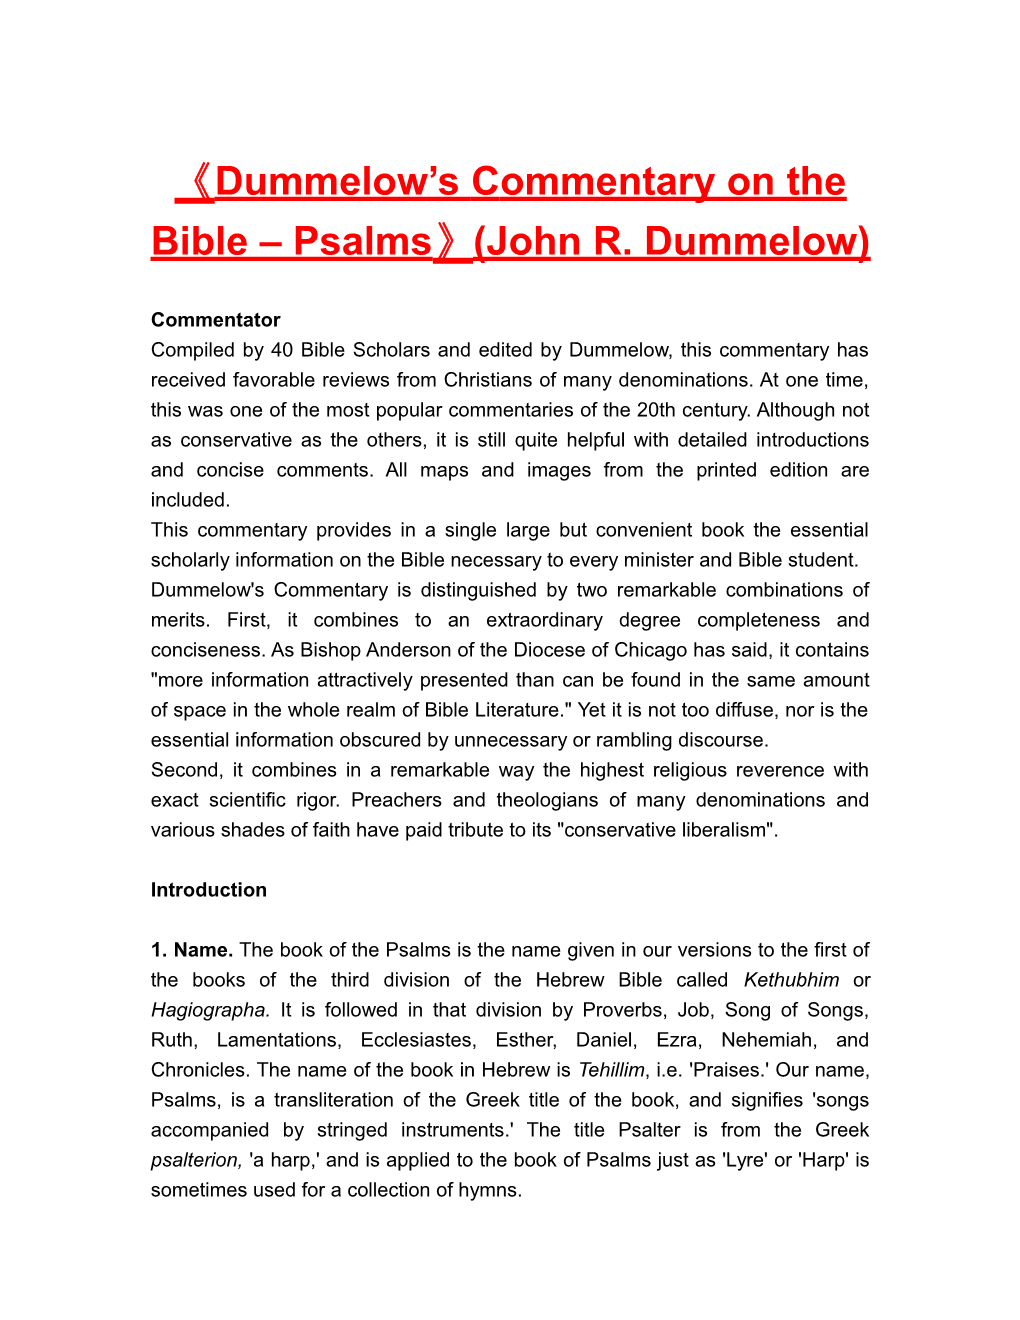 Dummelow S Commentary on the Bible Psalms (John R. Dummelow)